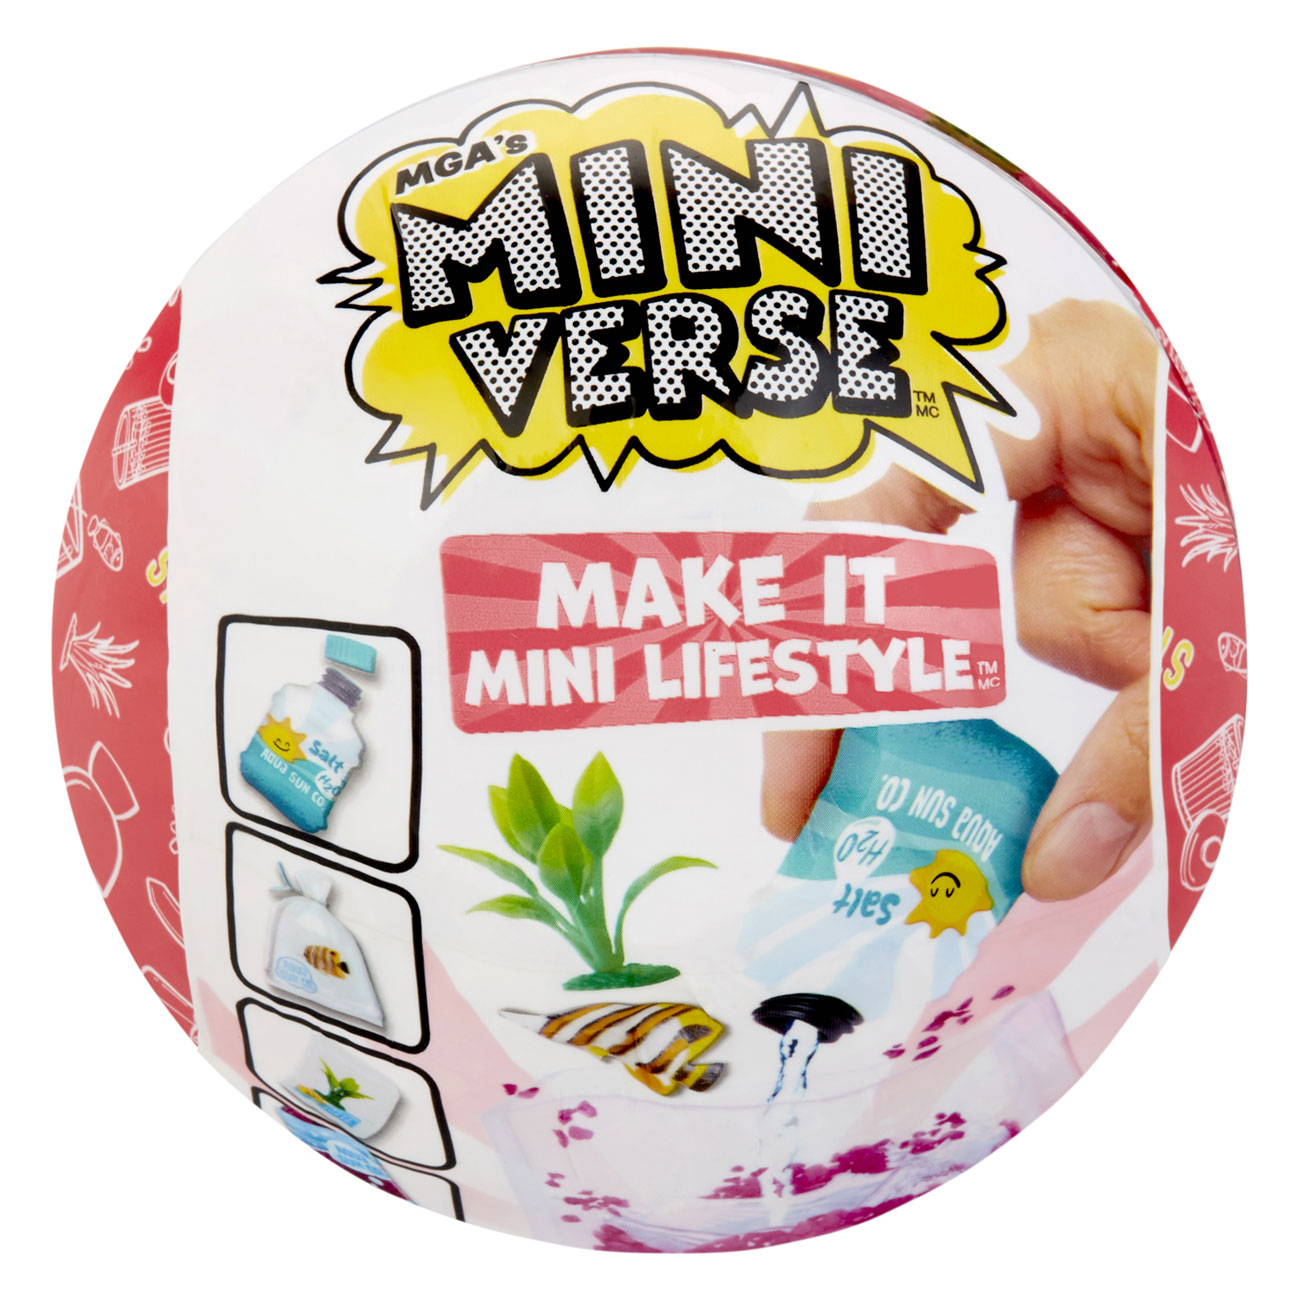 MGA's Miniverse - Make It Mini Food Cafe Series 1 Minis